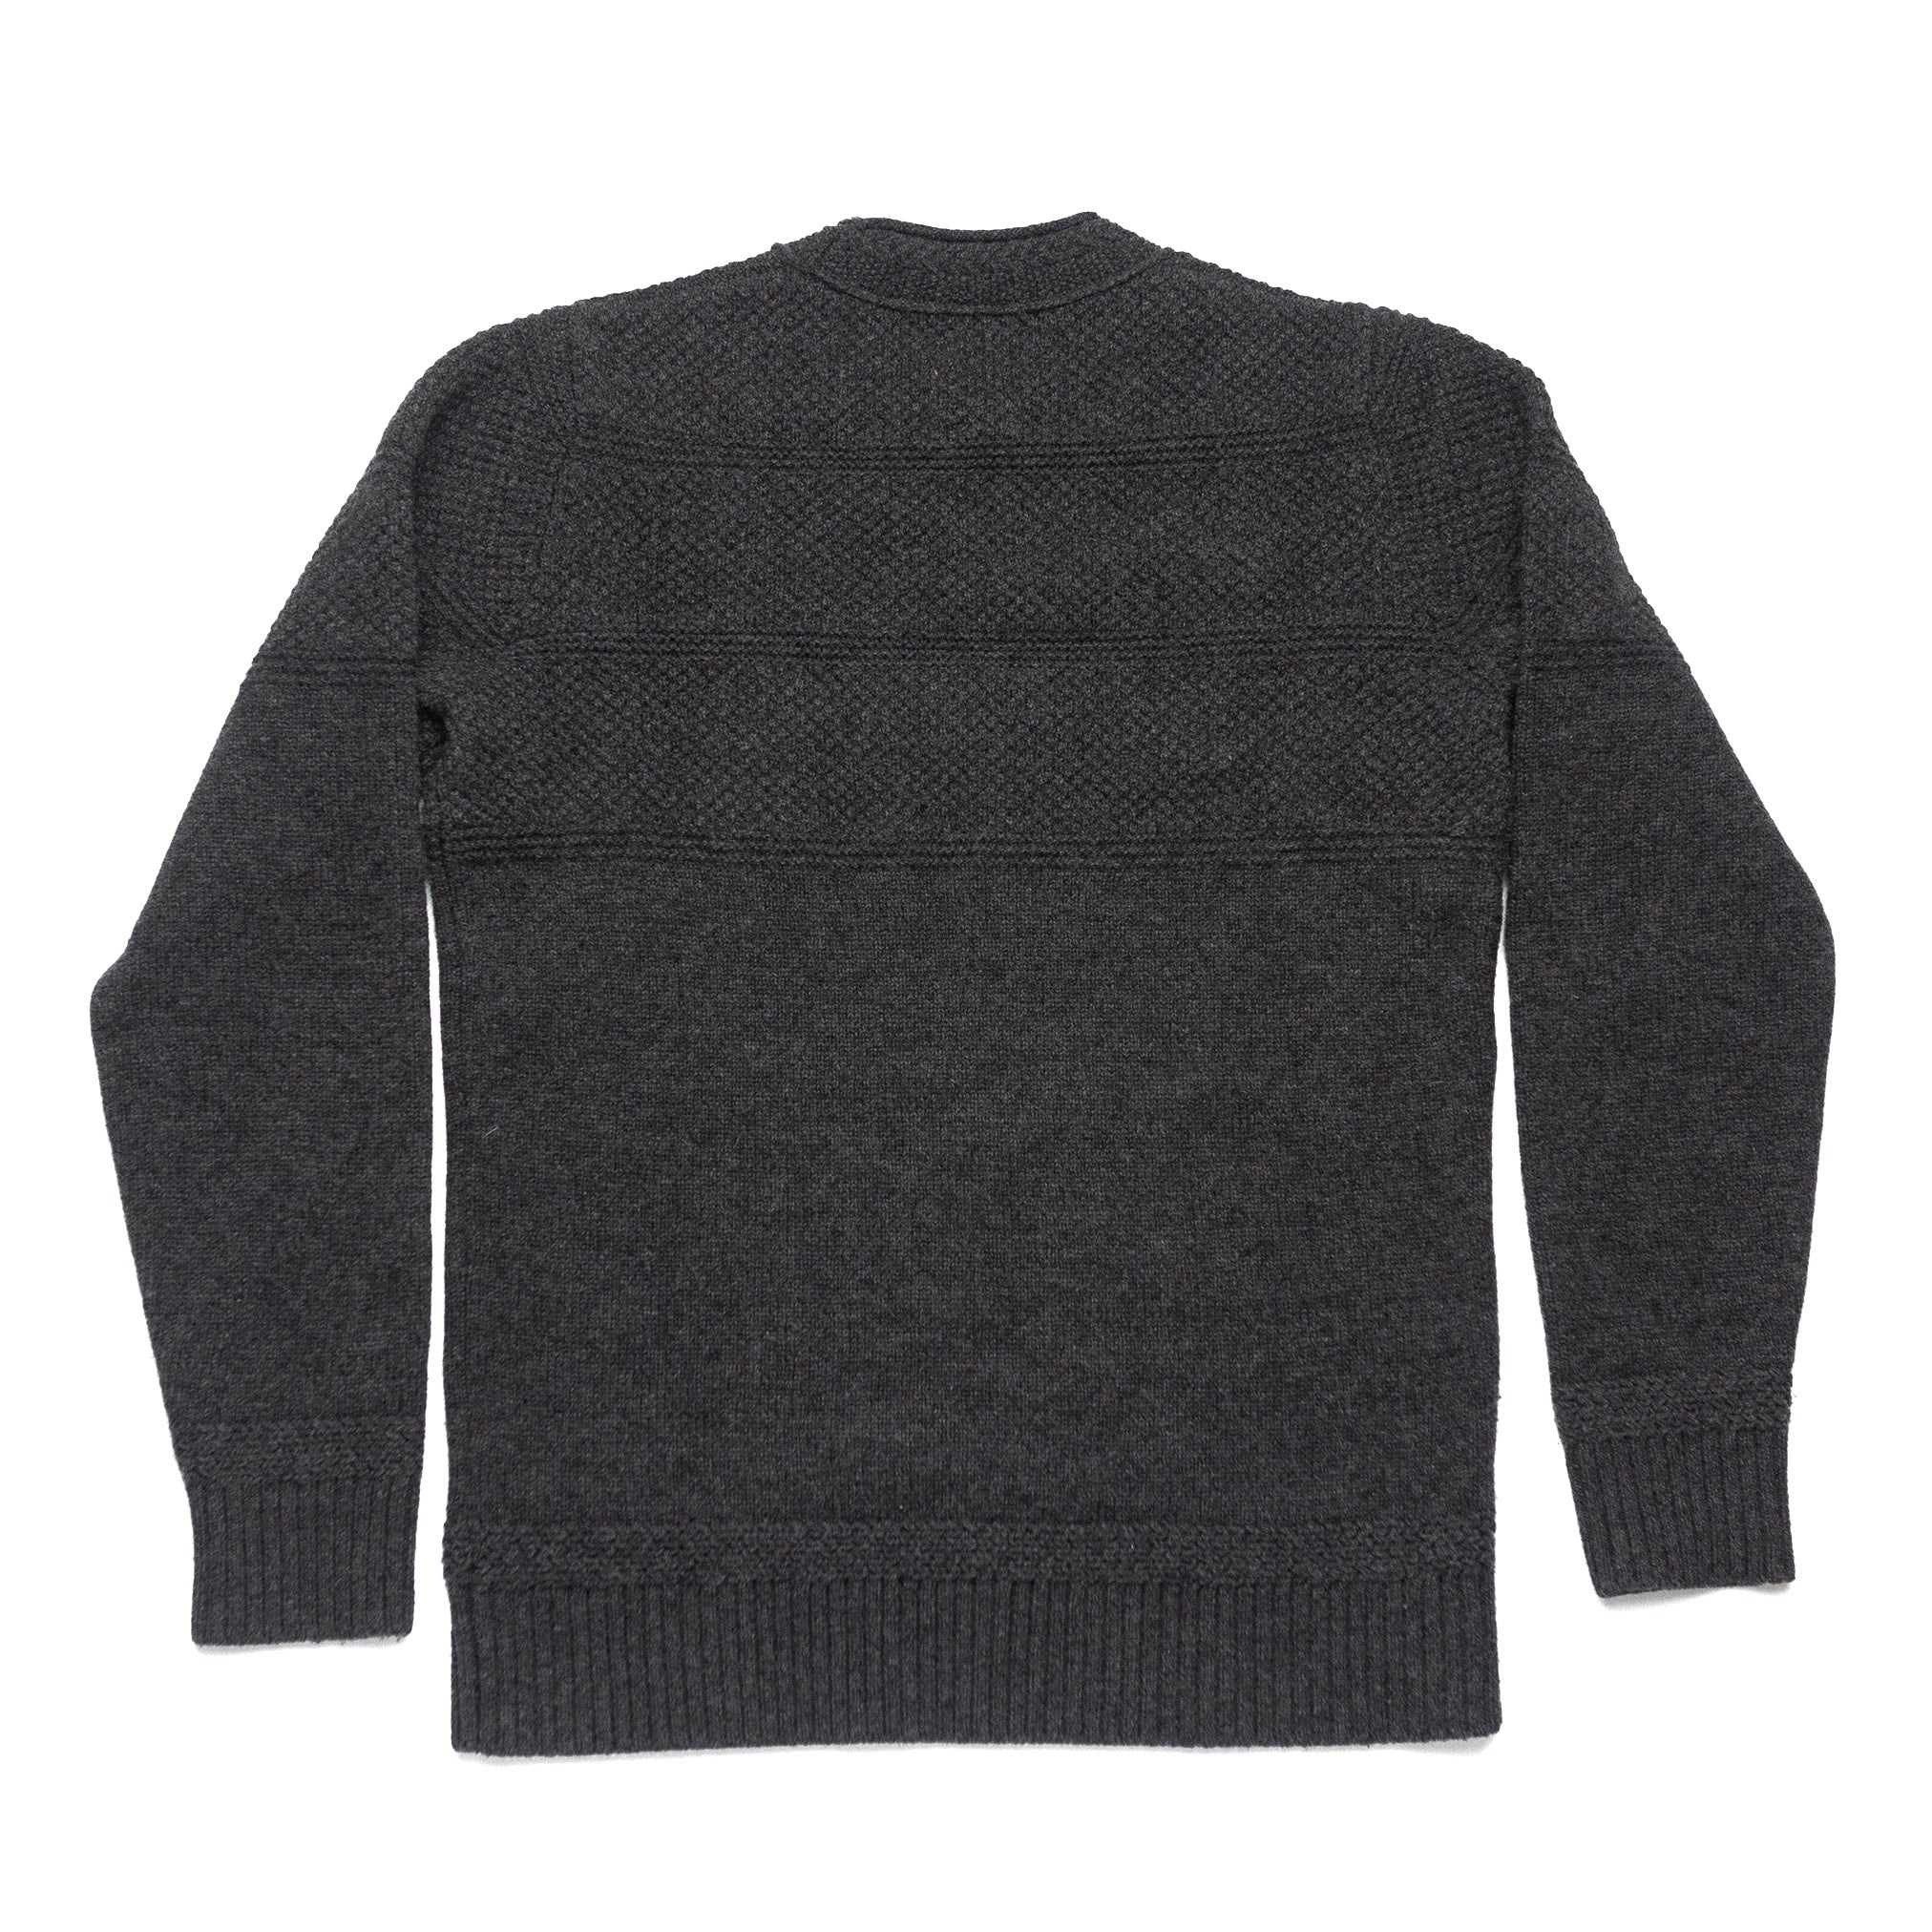 Ventana Sweater in Graphite - XS